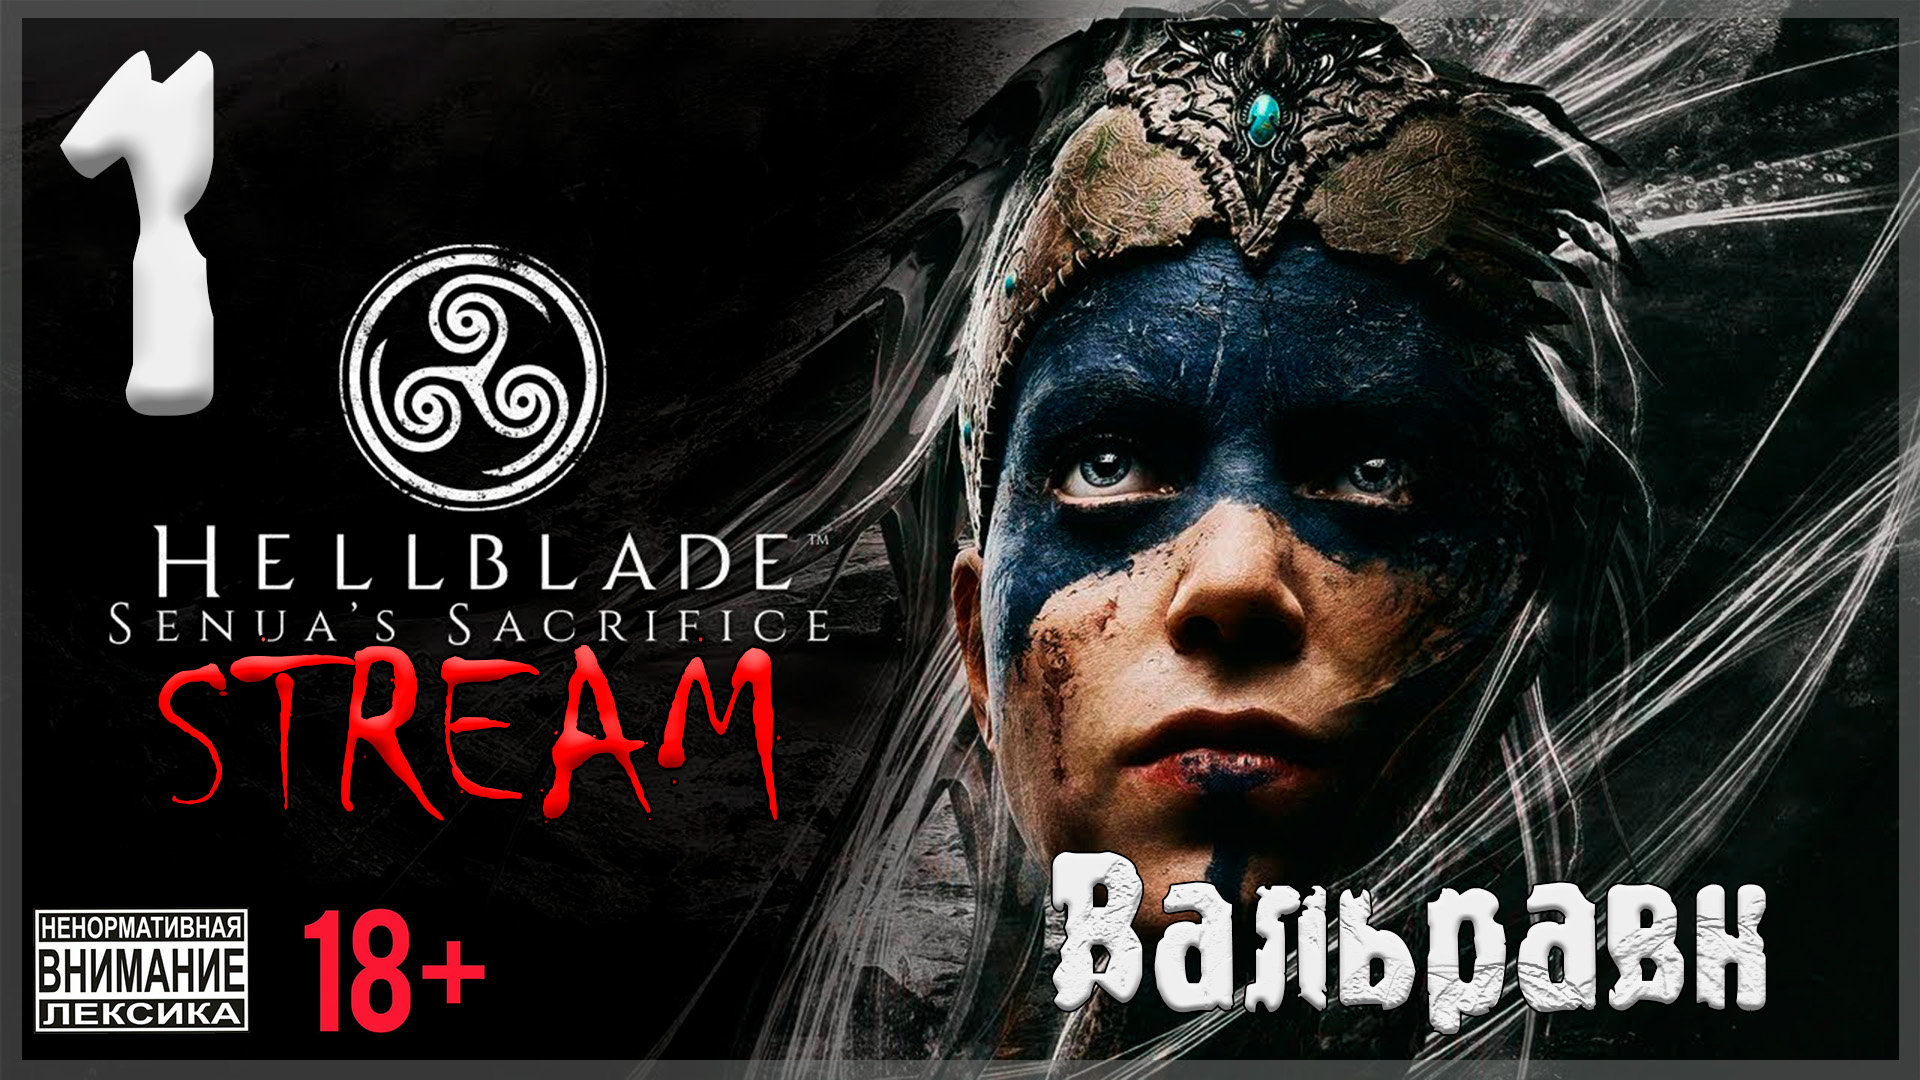 Stream - Hellblade: Senua’s Sacrifice #1 Вальравн - Бог Иллюзий